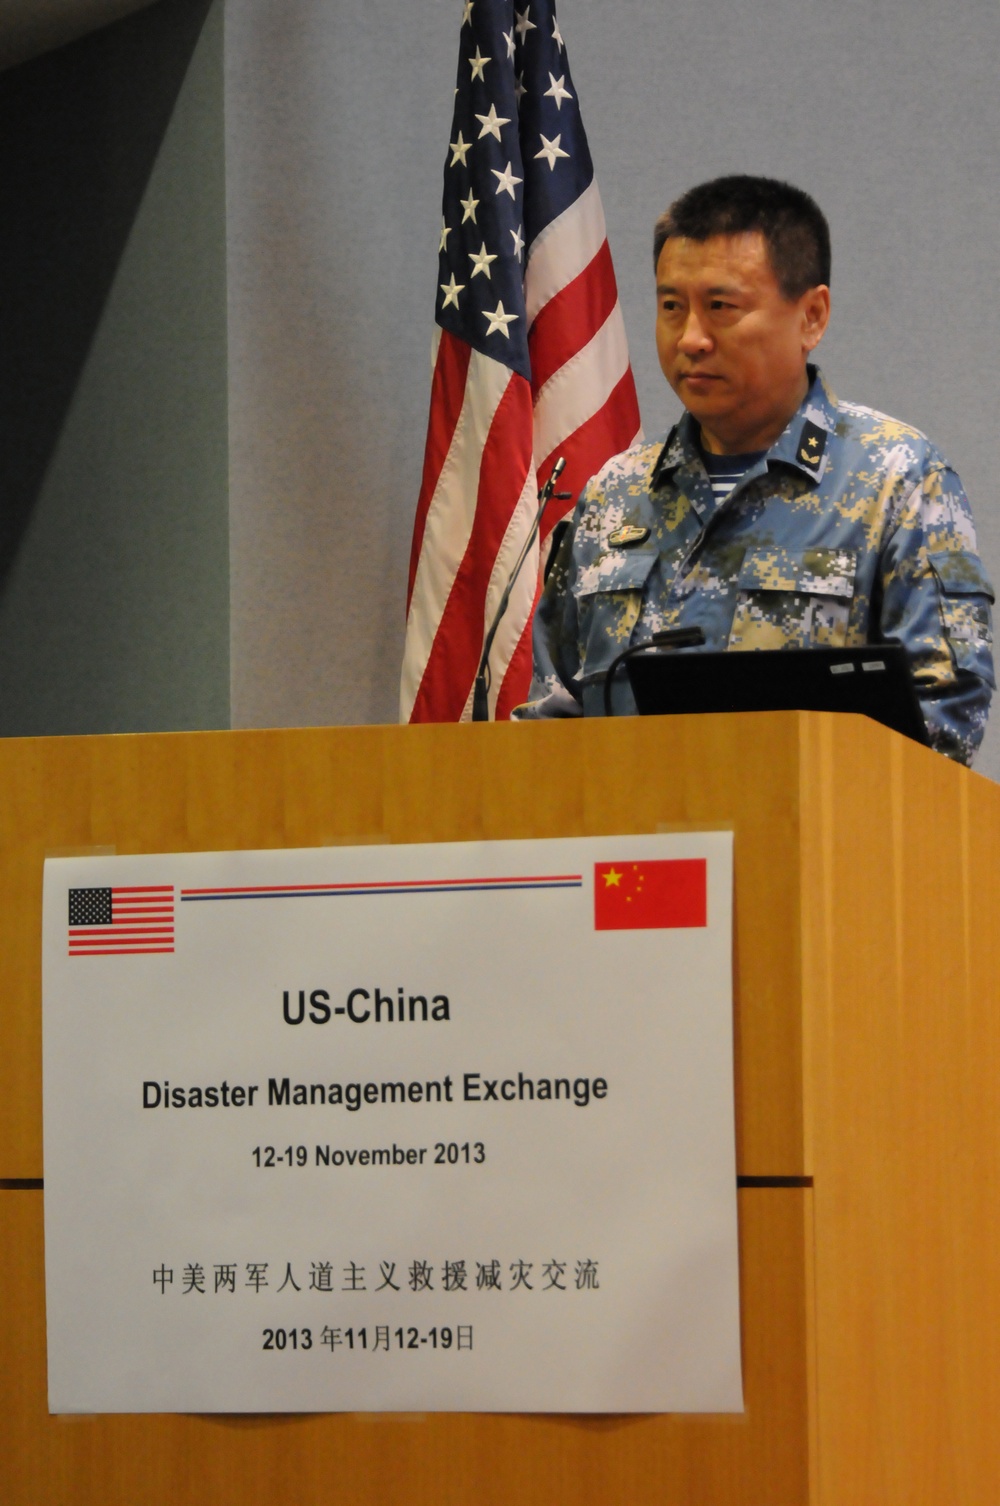 2013 Disaster Management Exchange opening remarks